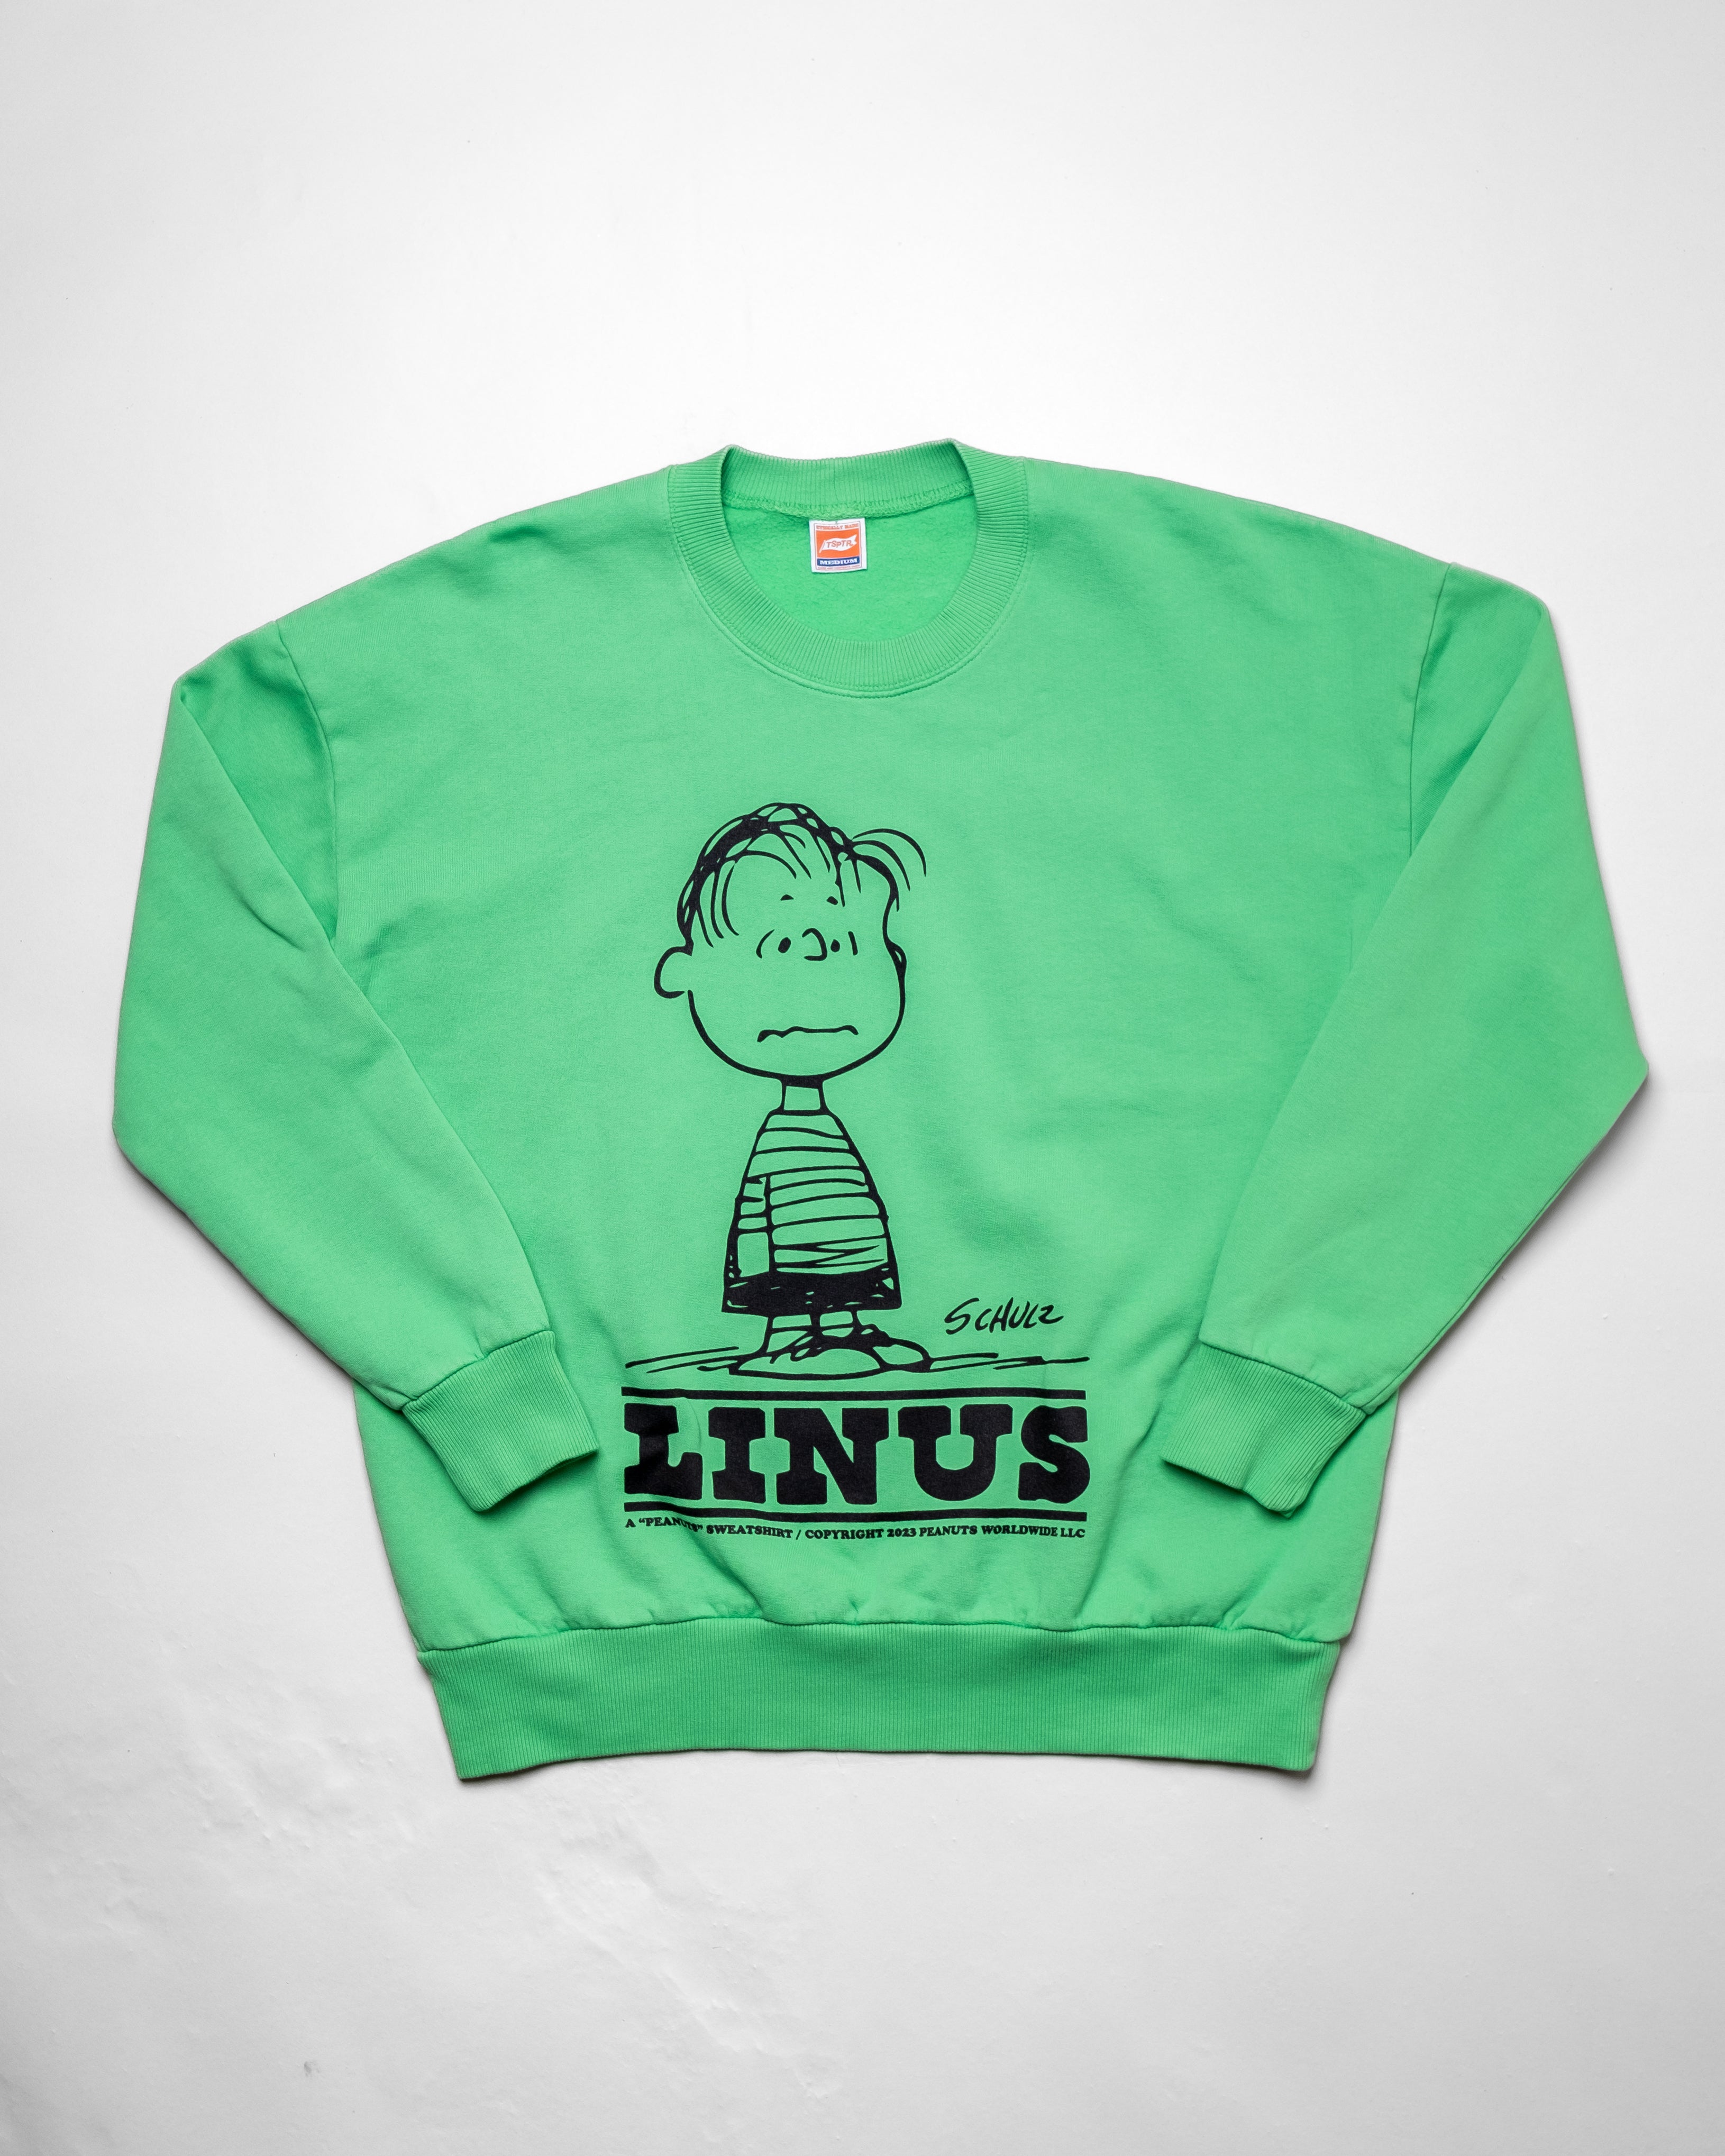 I Love Mankind Sweatshirt in Grassy Green